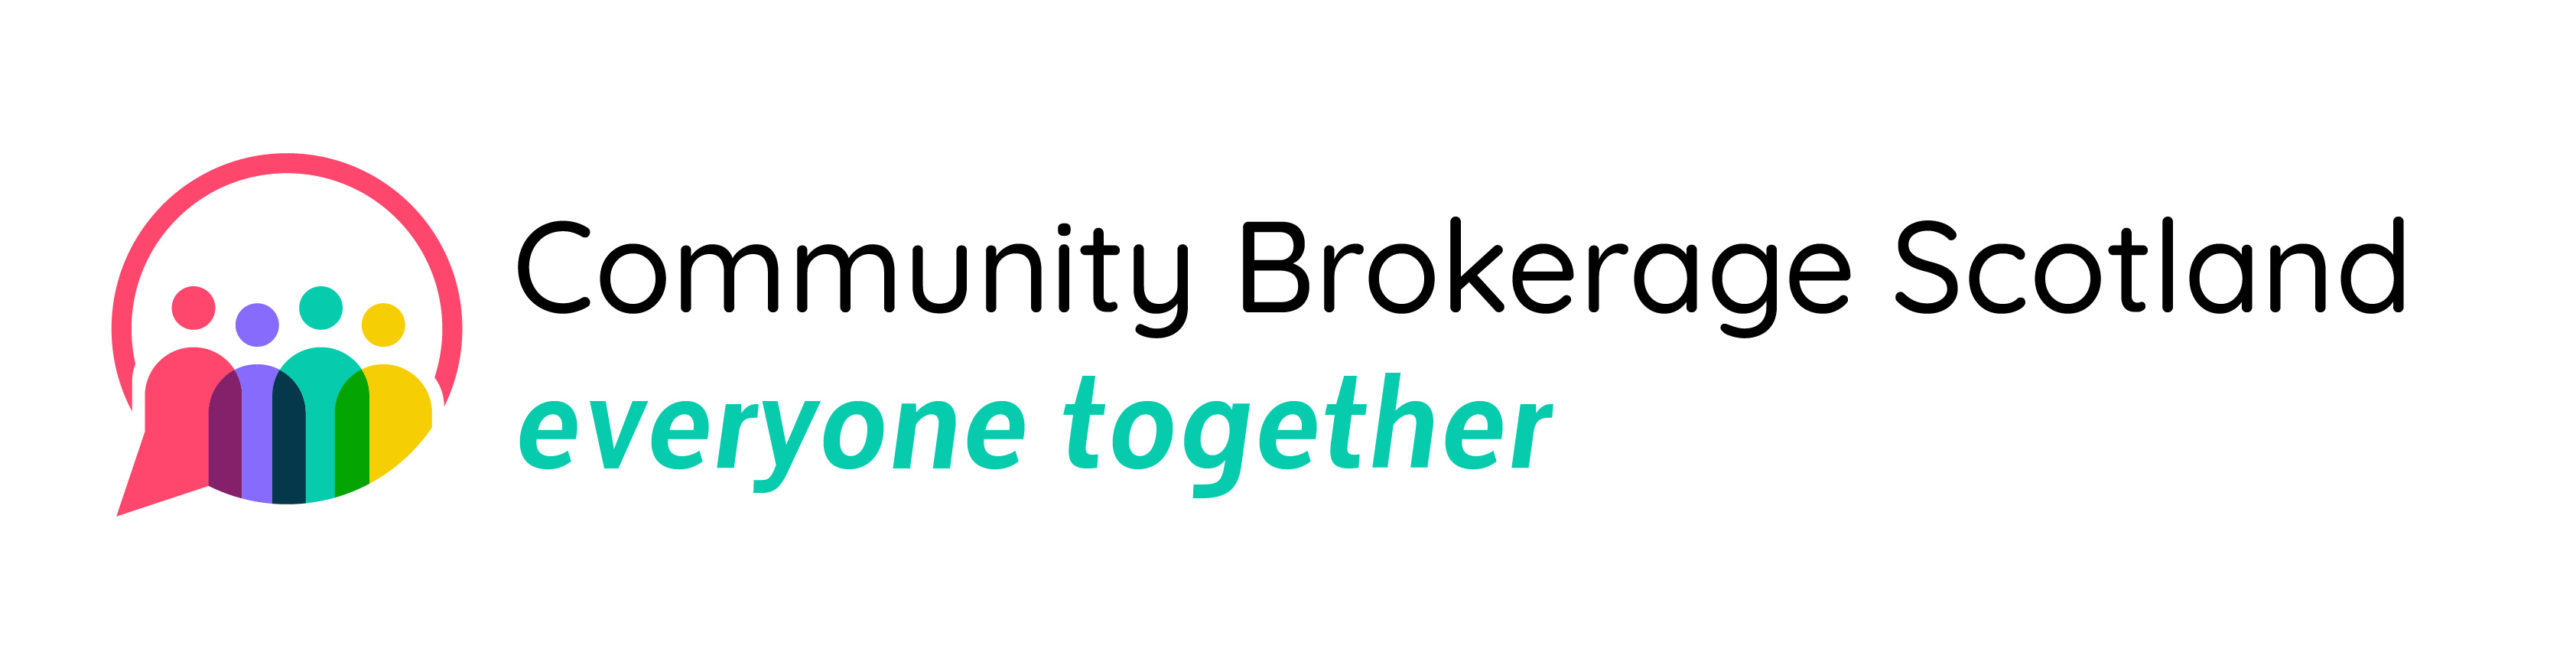 Community Brokerage Scotland logo with strapline, "everyone together"